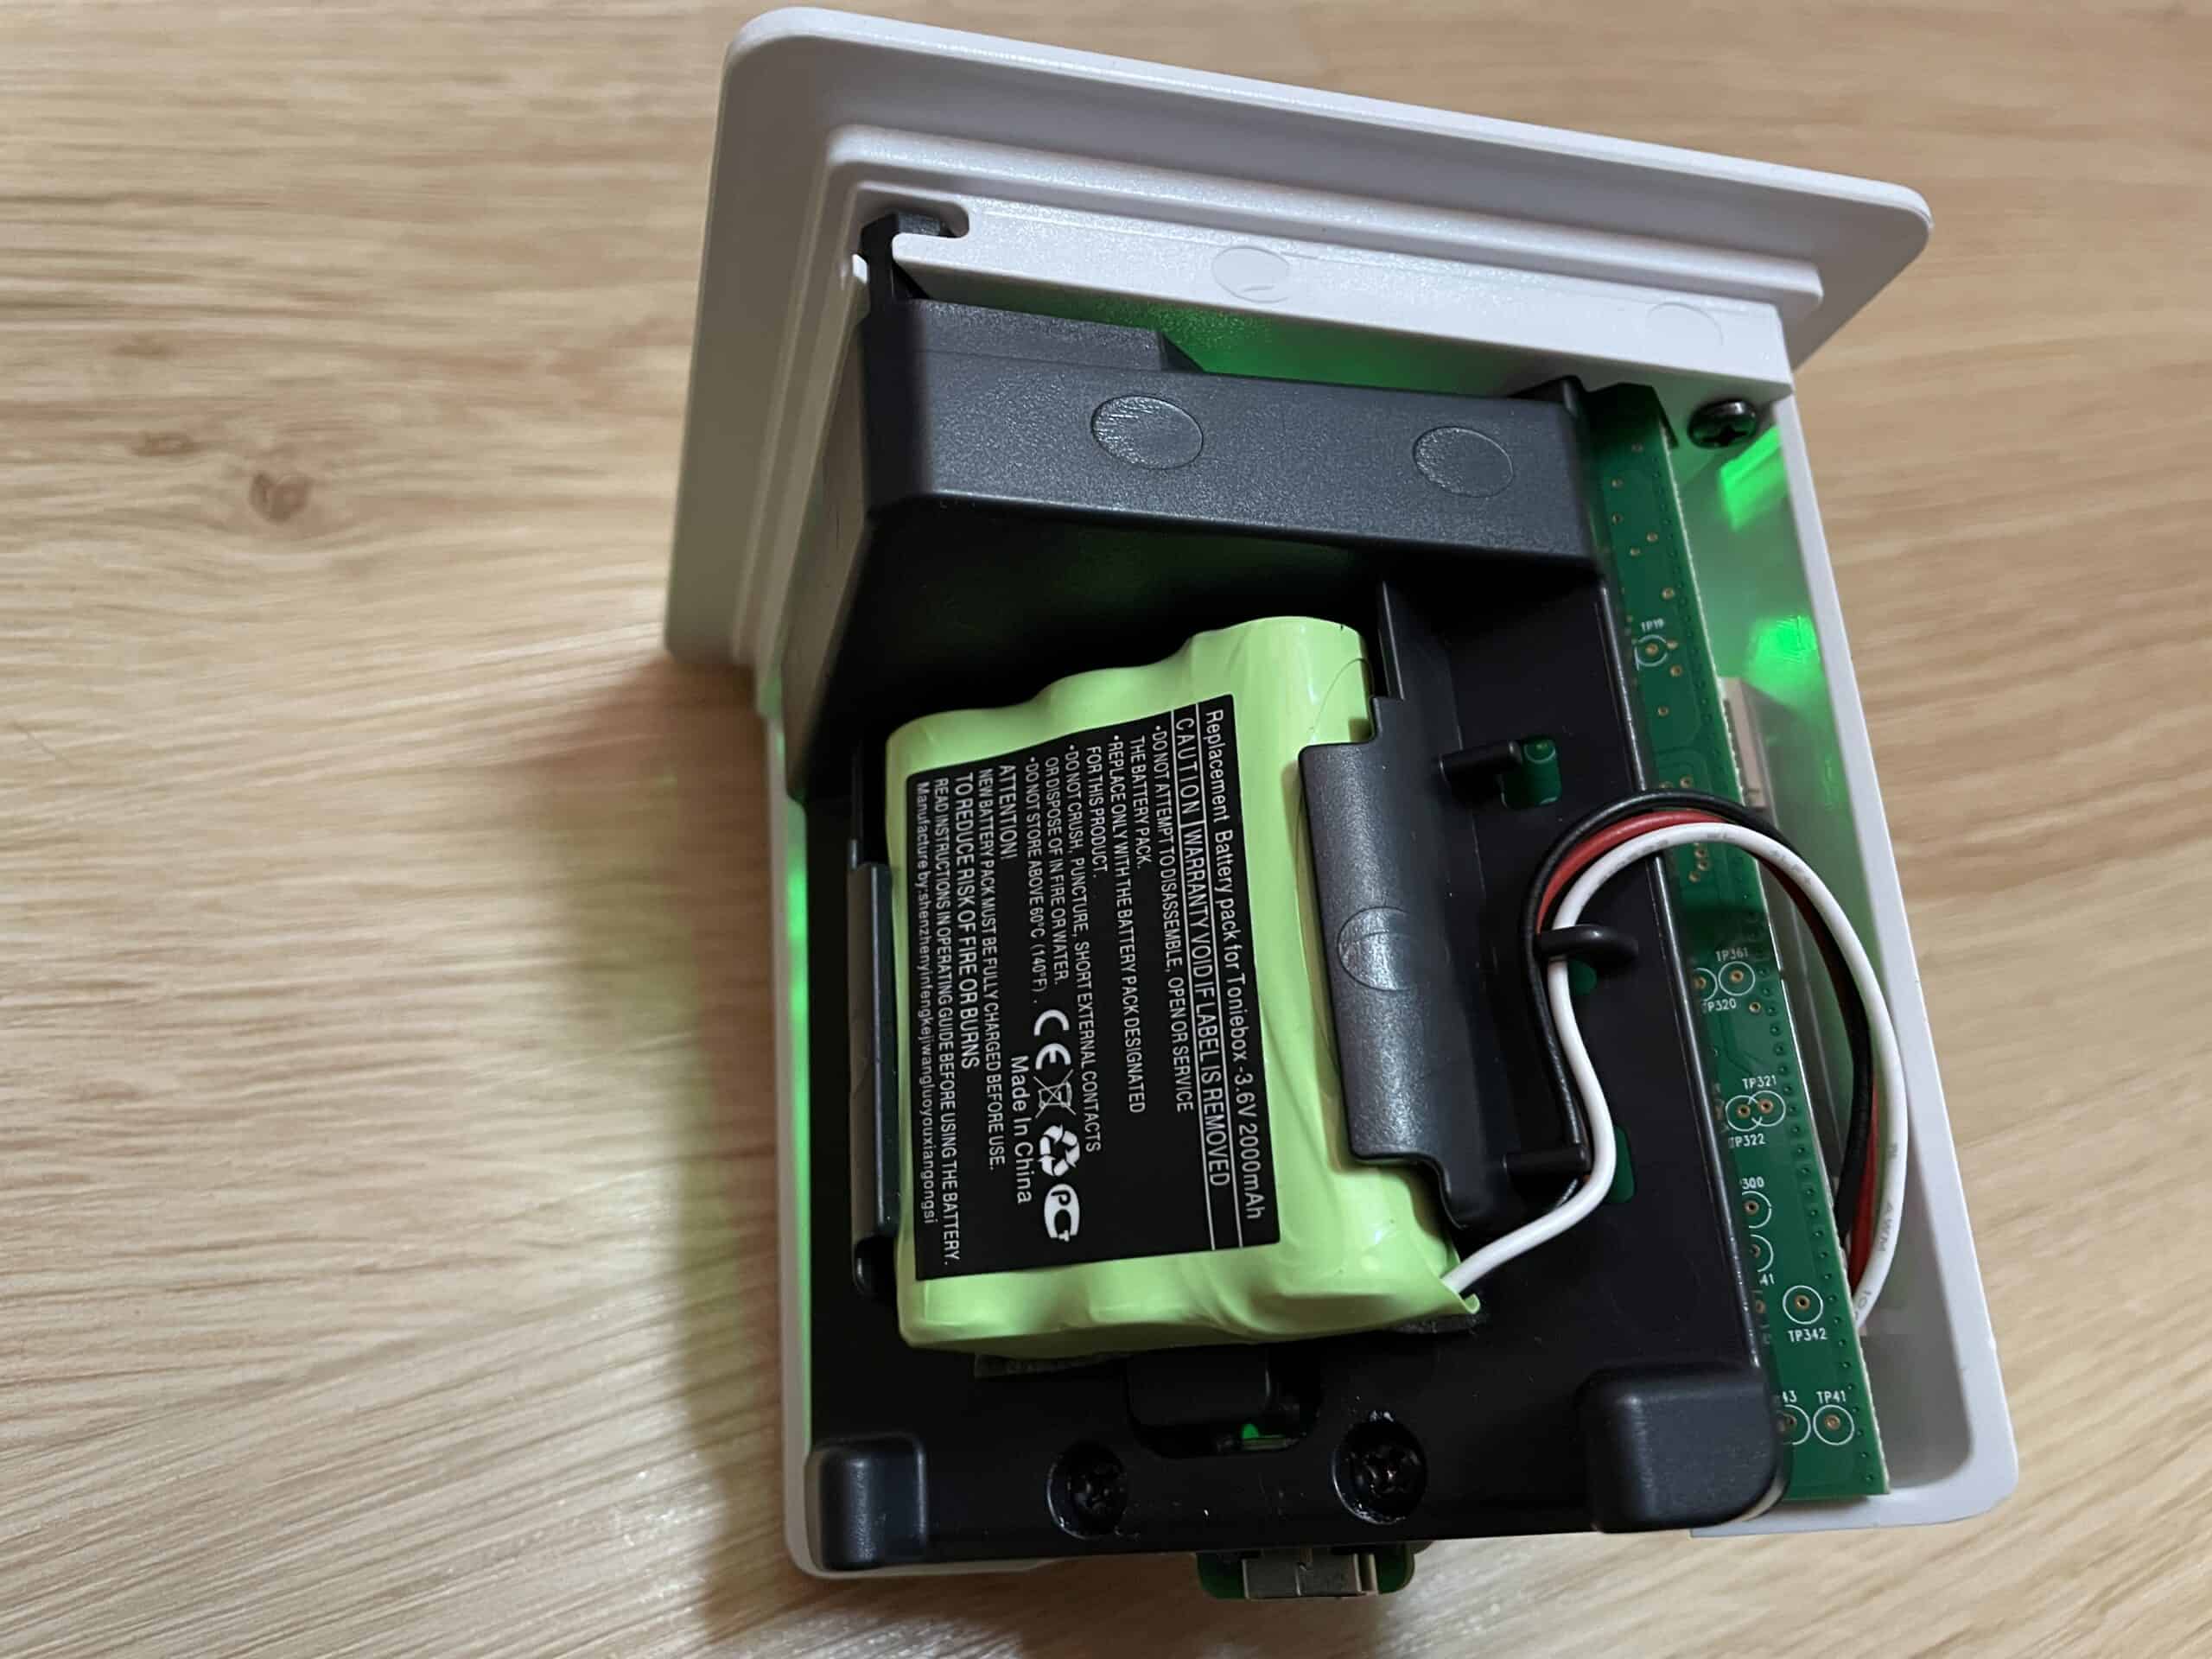 Akku Wechsel bei der Toniebox / Changing the Toniebox battery 